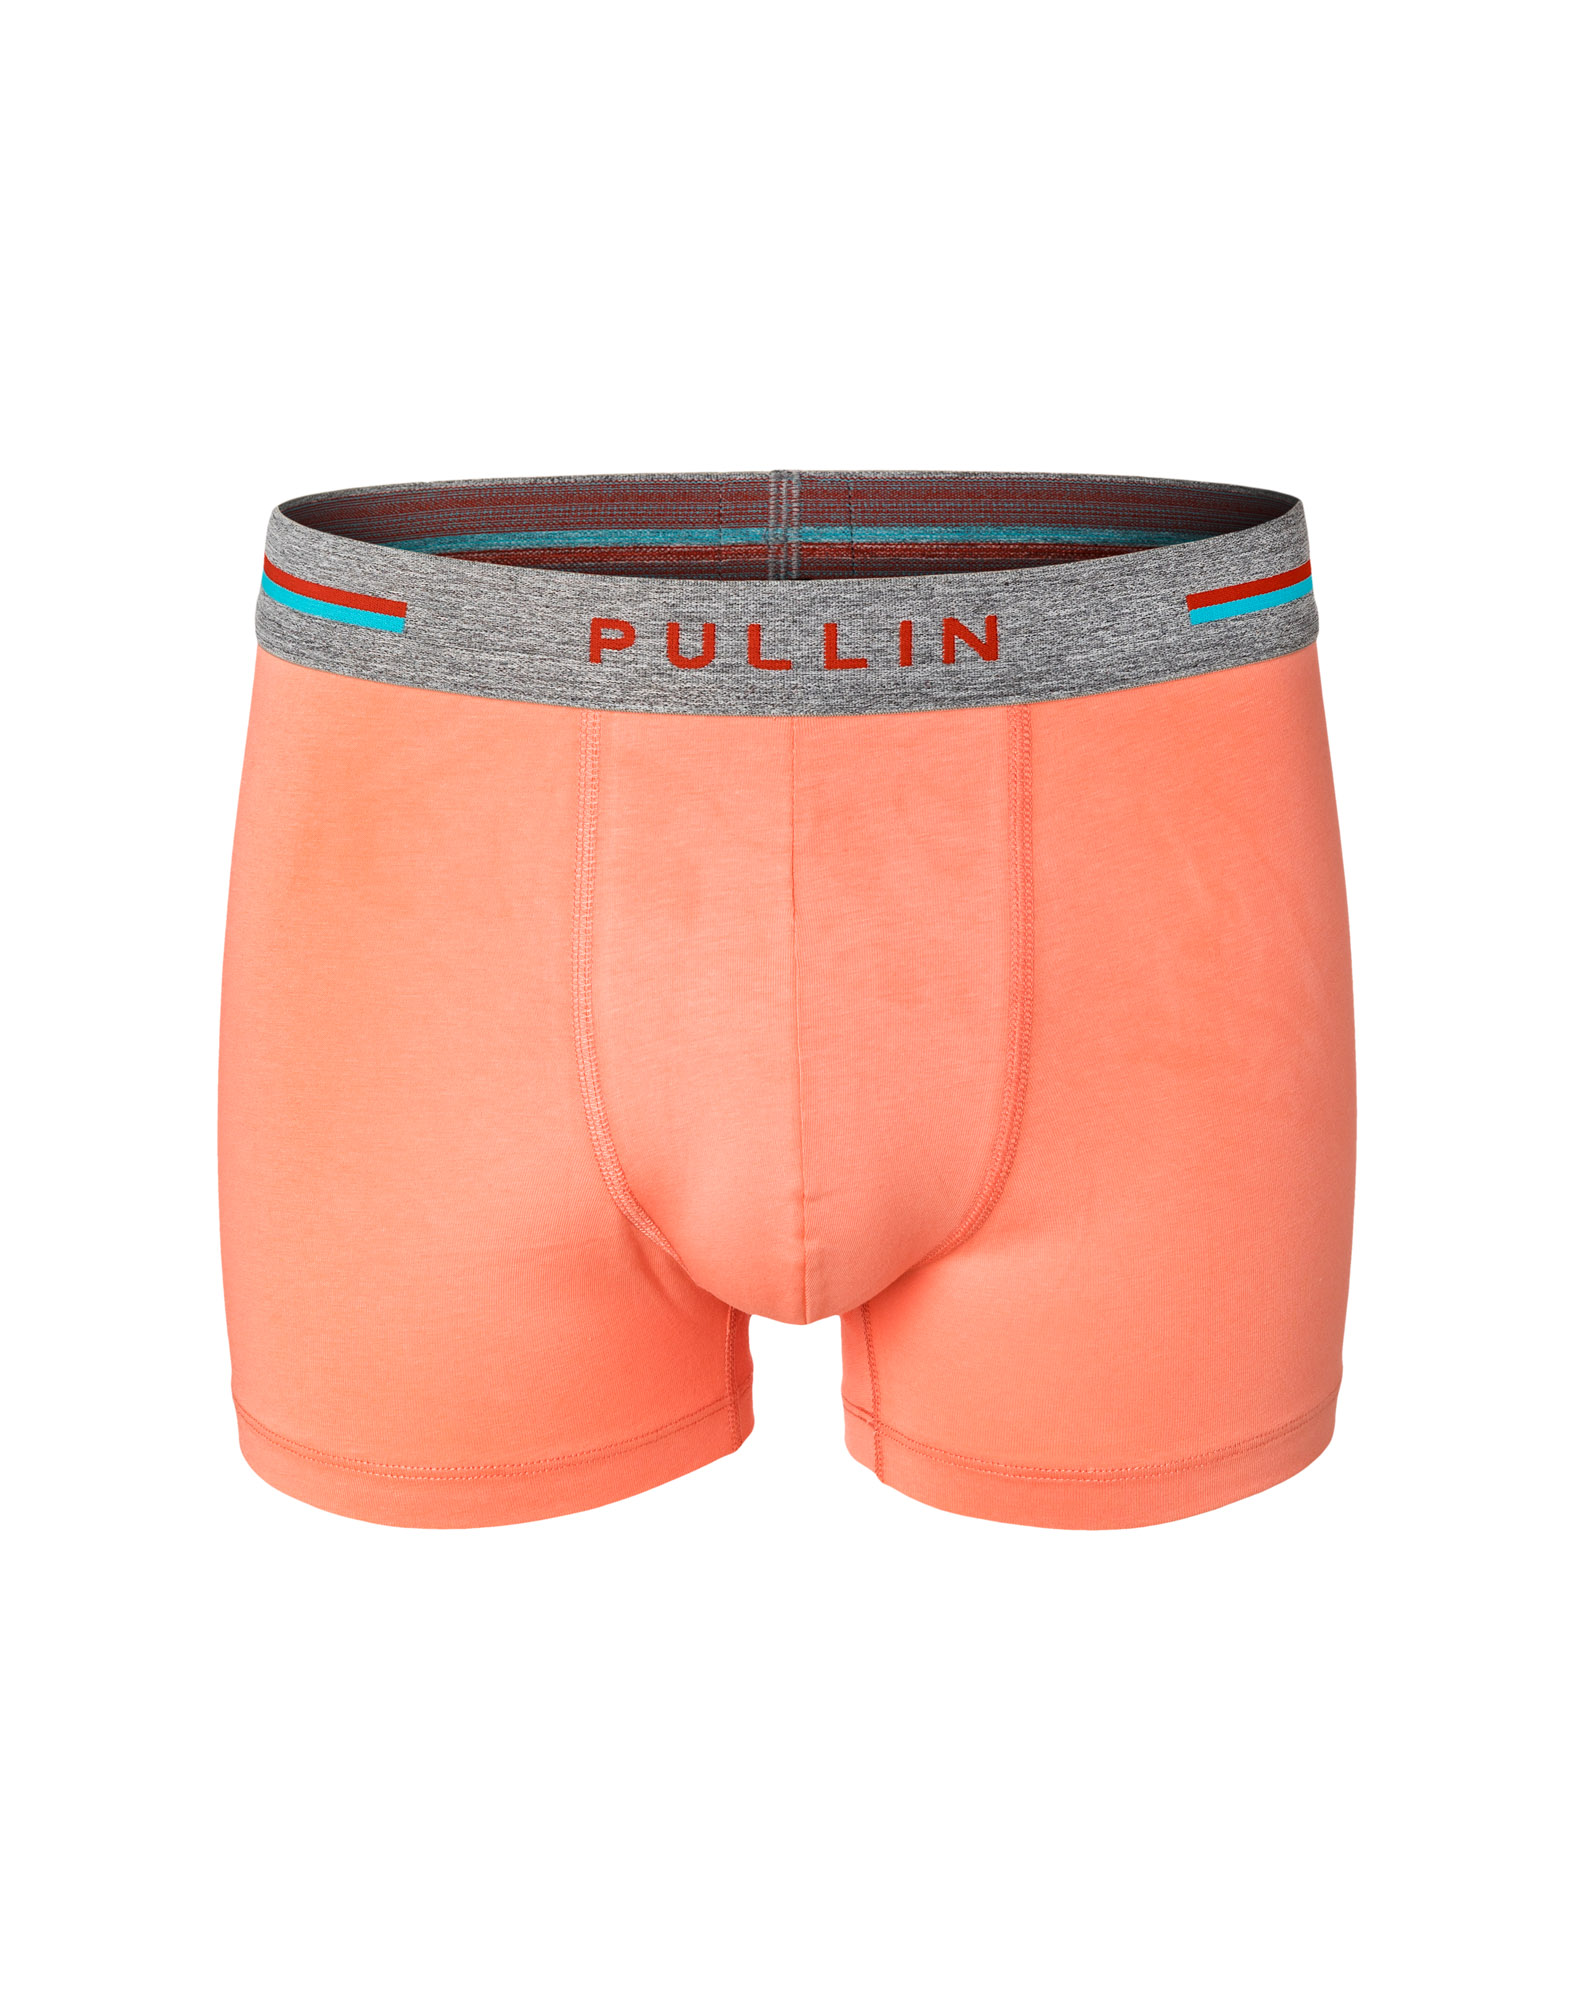 PINK MEN'S TRUNK MASTER COTON CORAL - Men's underwear PULLIN